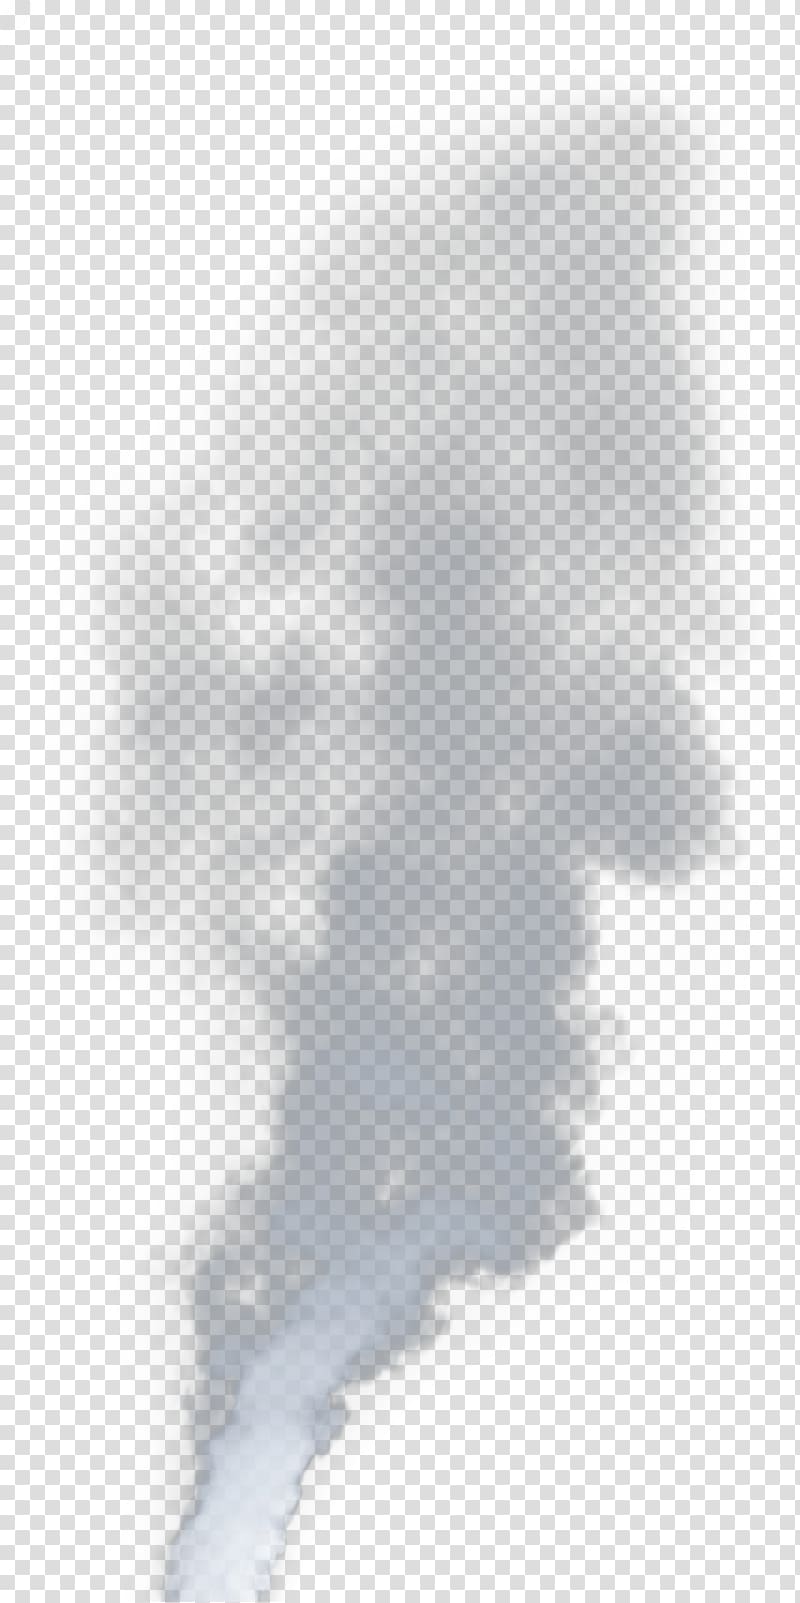 gray smoke illustration, Smoke White Fog, White smoke transparent background PNG clipart